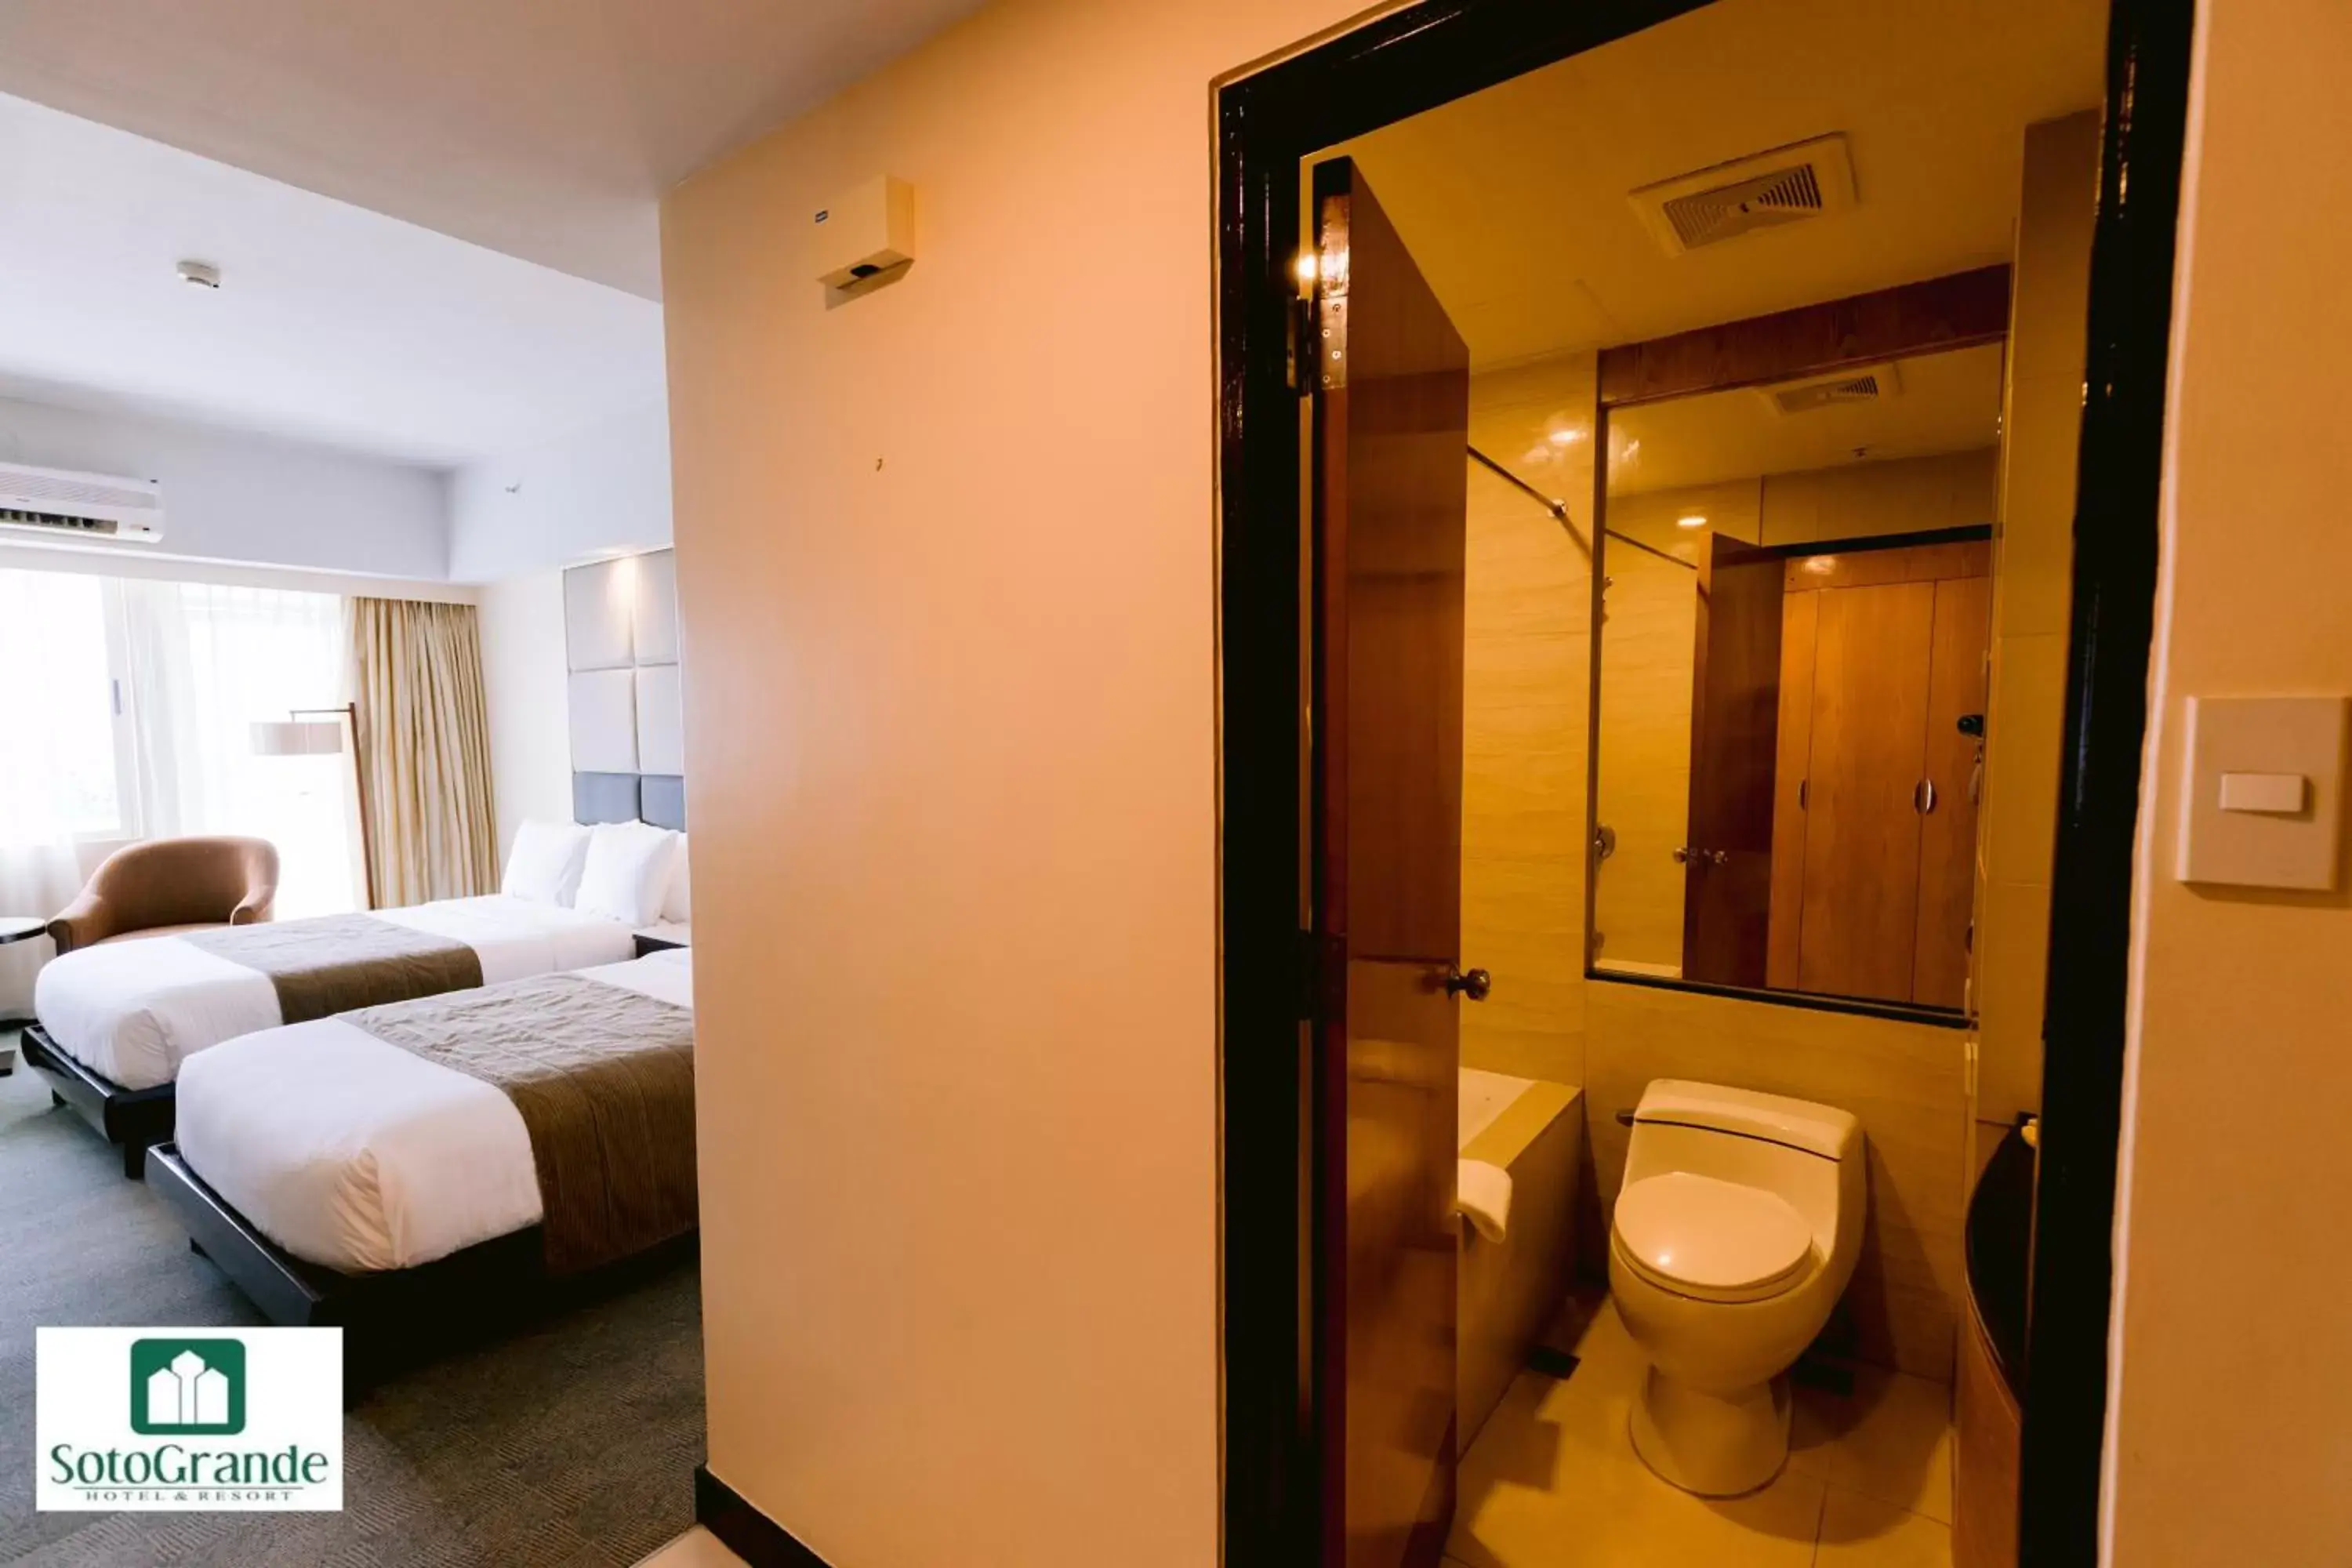 Bathroom in Sotogrande Hotel and Resort